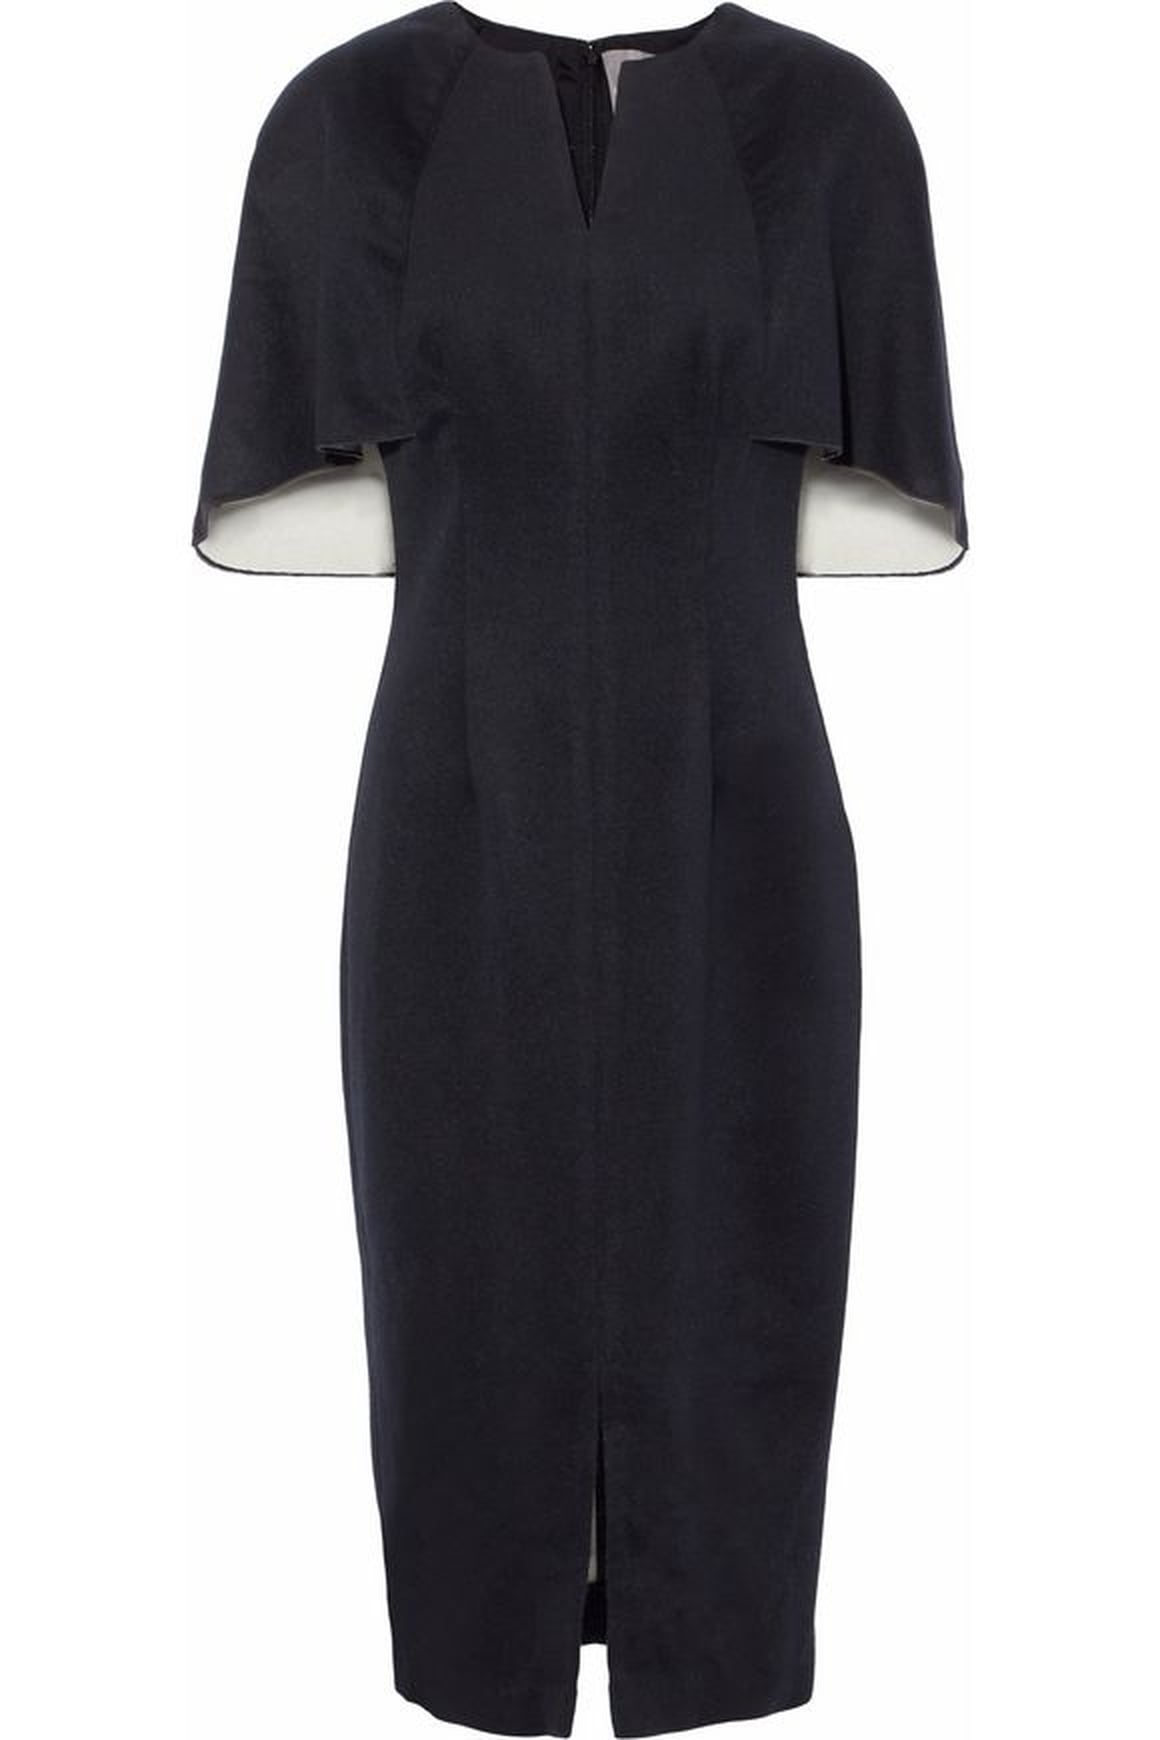 Melania Trump's Black Givenchy Cape | POPSUGAR Fashion